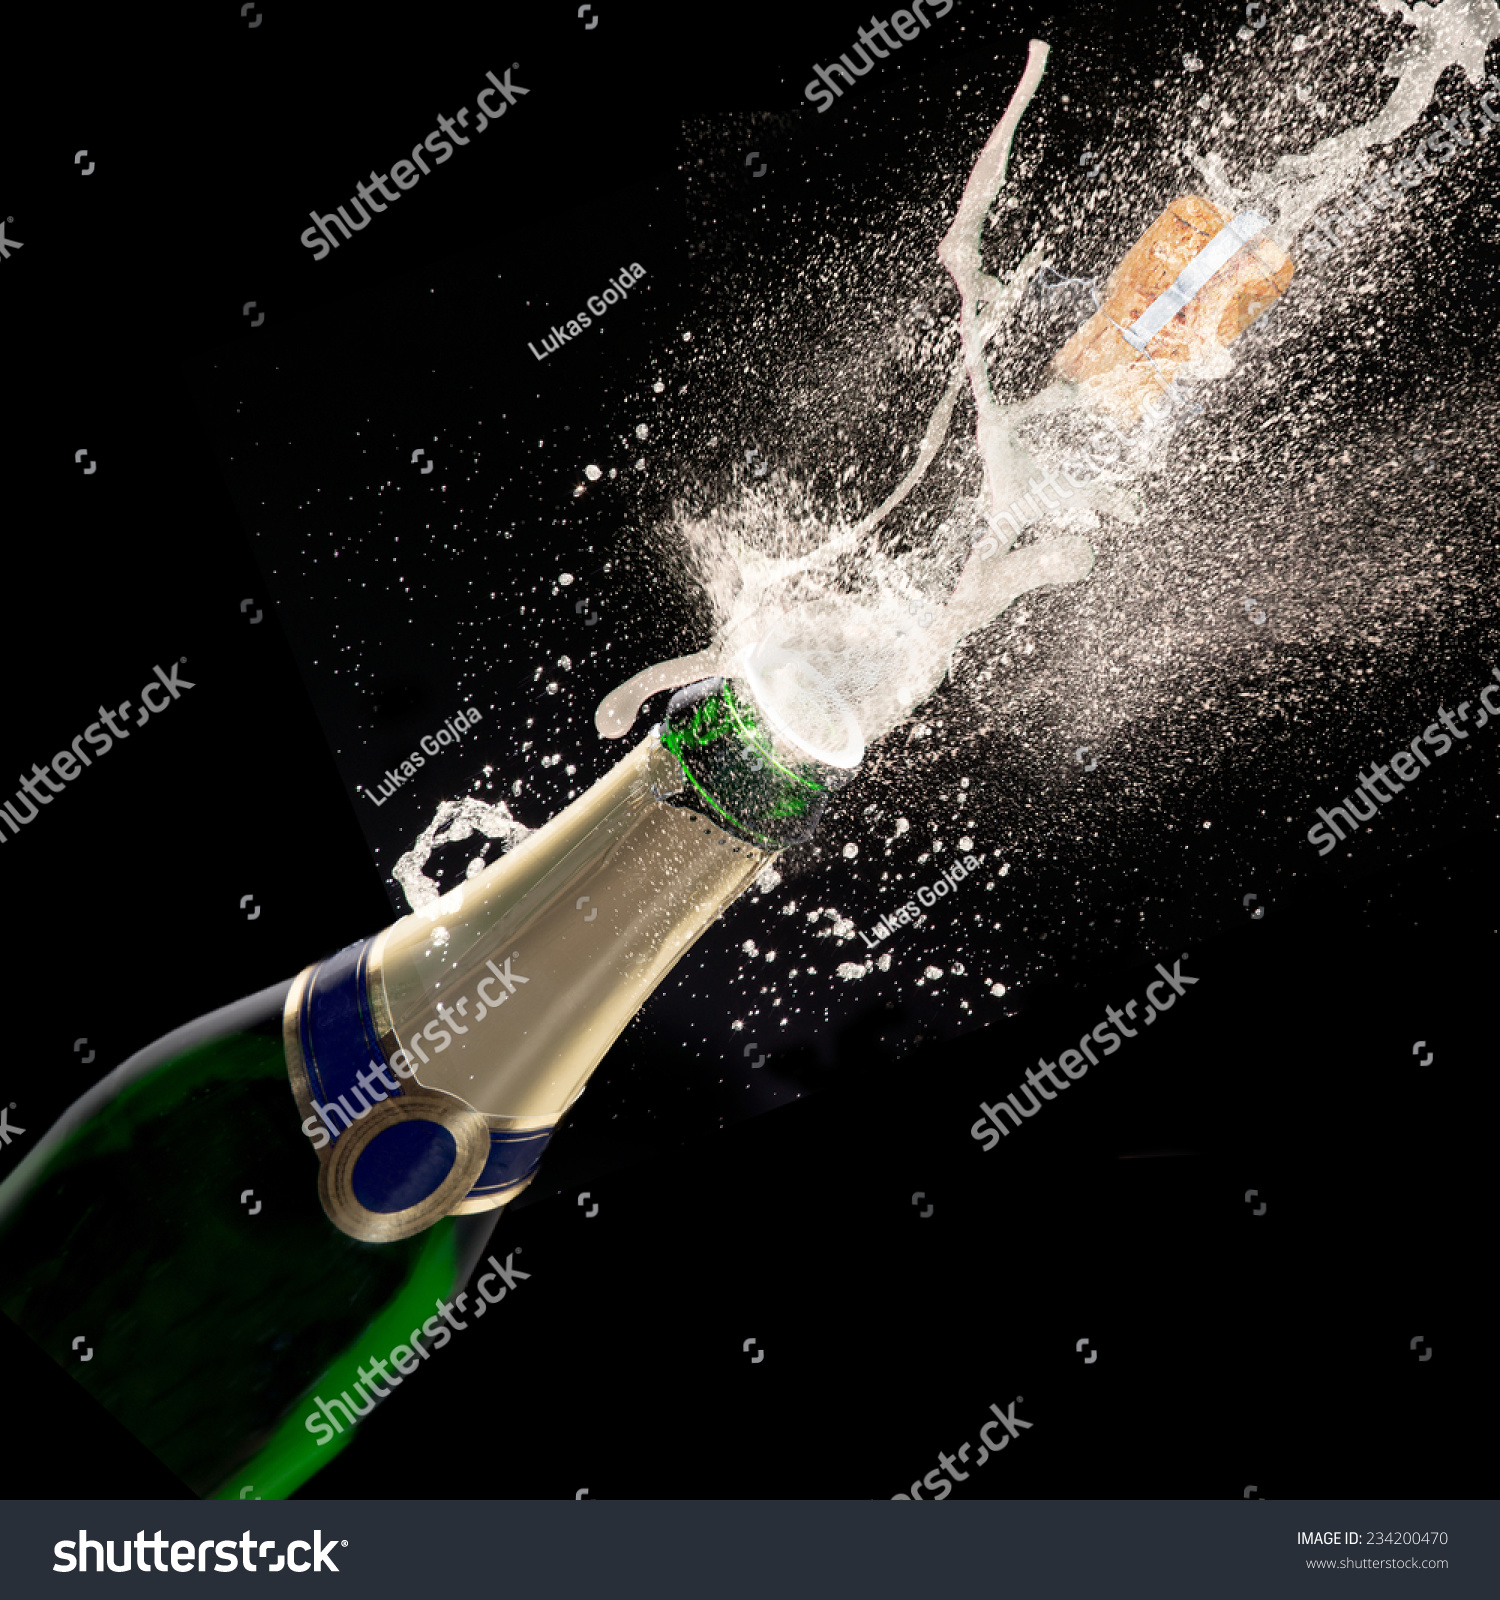 Champagne explosion on black background, celebration theme. #234200470